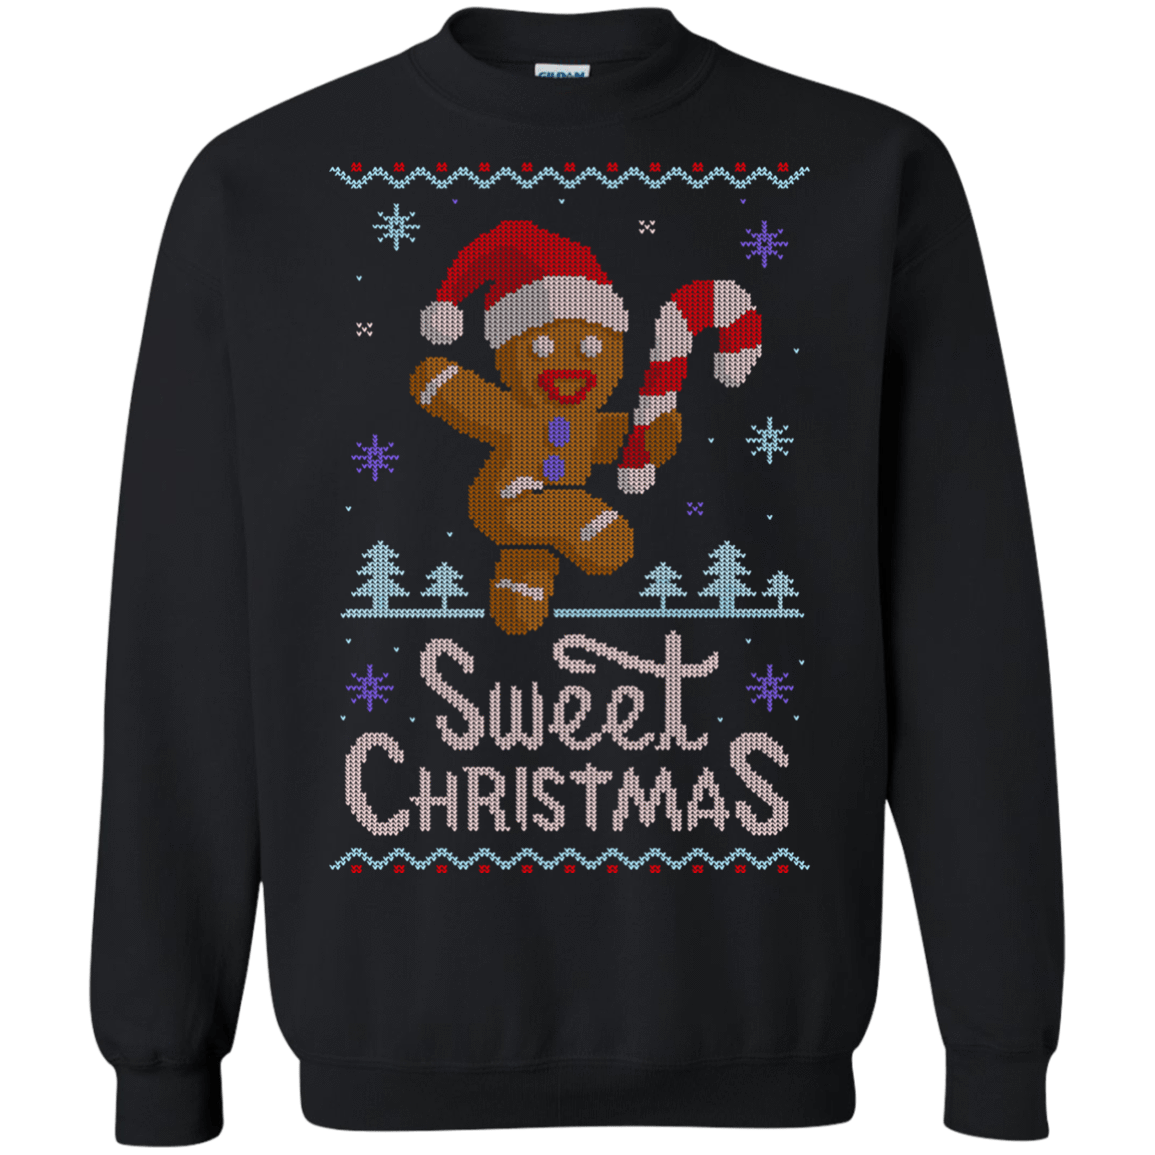 Sweatshirts Black / Small Ginger Bread Sweater Crewneck Sweatshirt